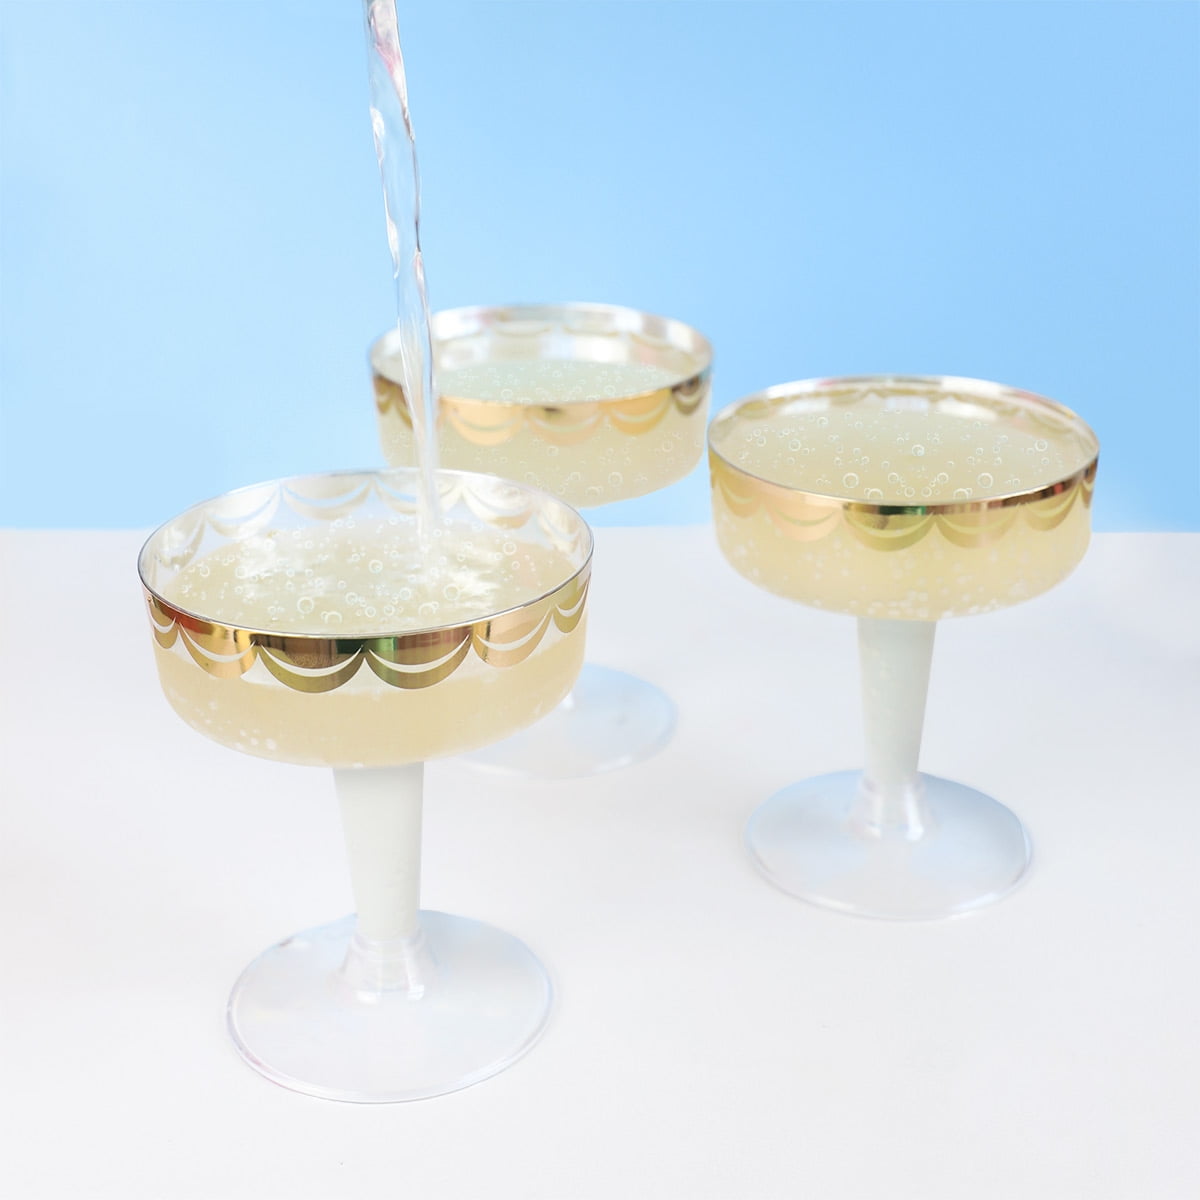 Coupe de Champagne Transparente - Diam 12 x H 16 cm - POMAX